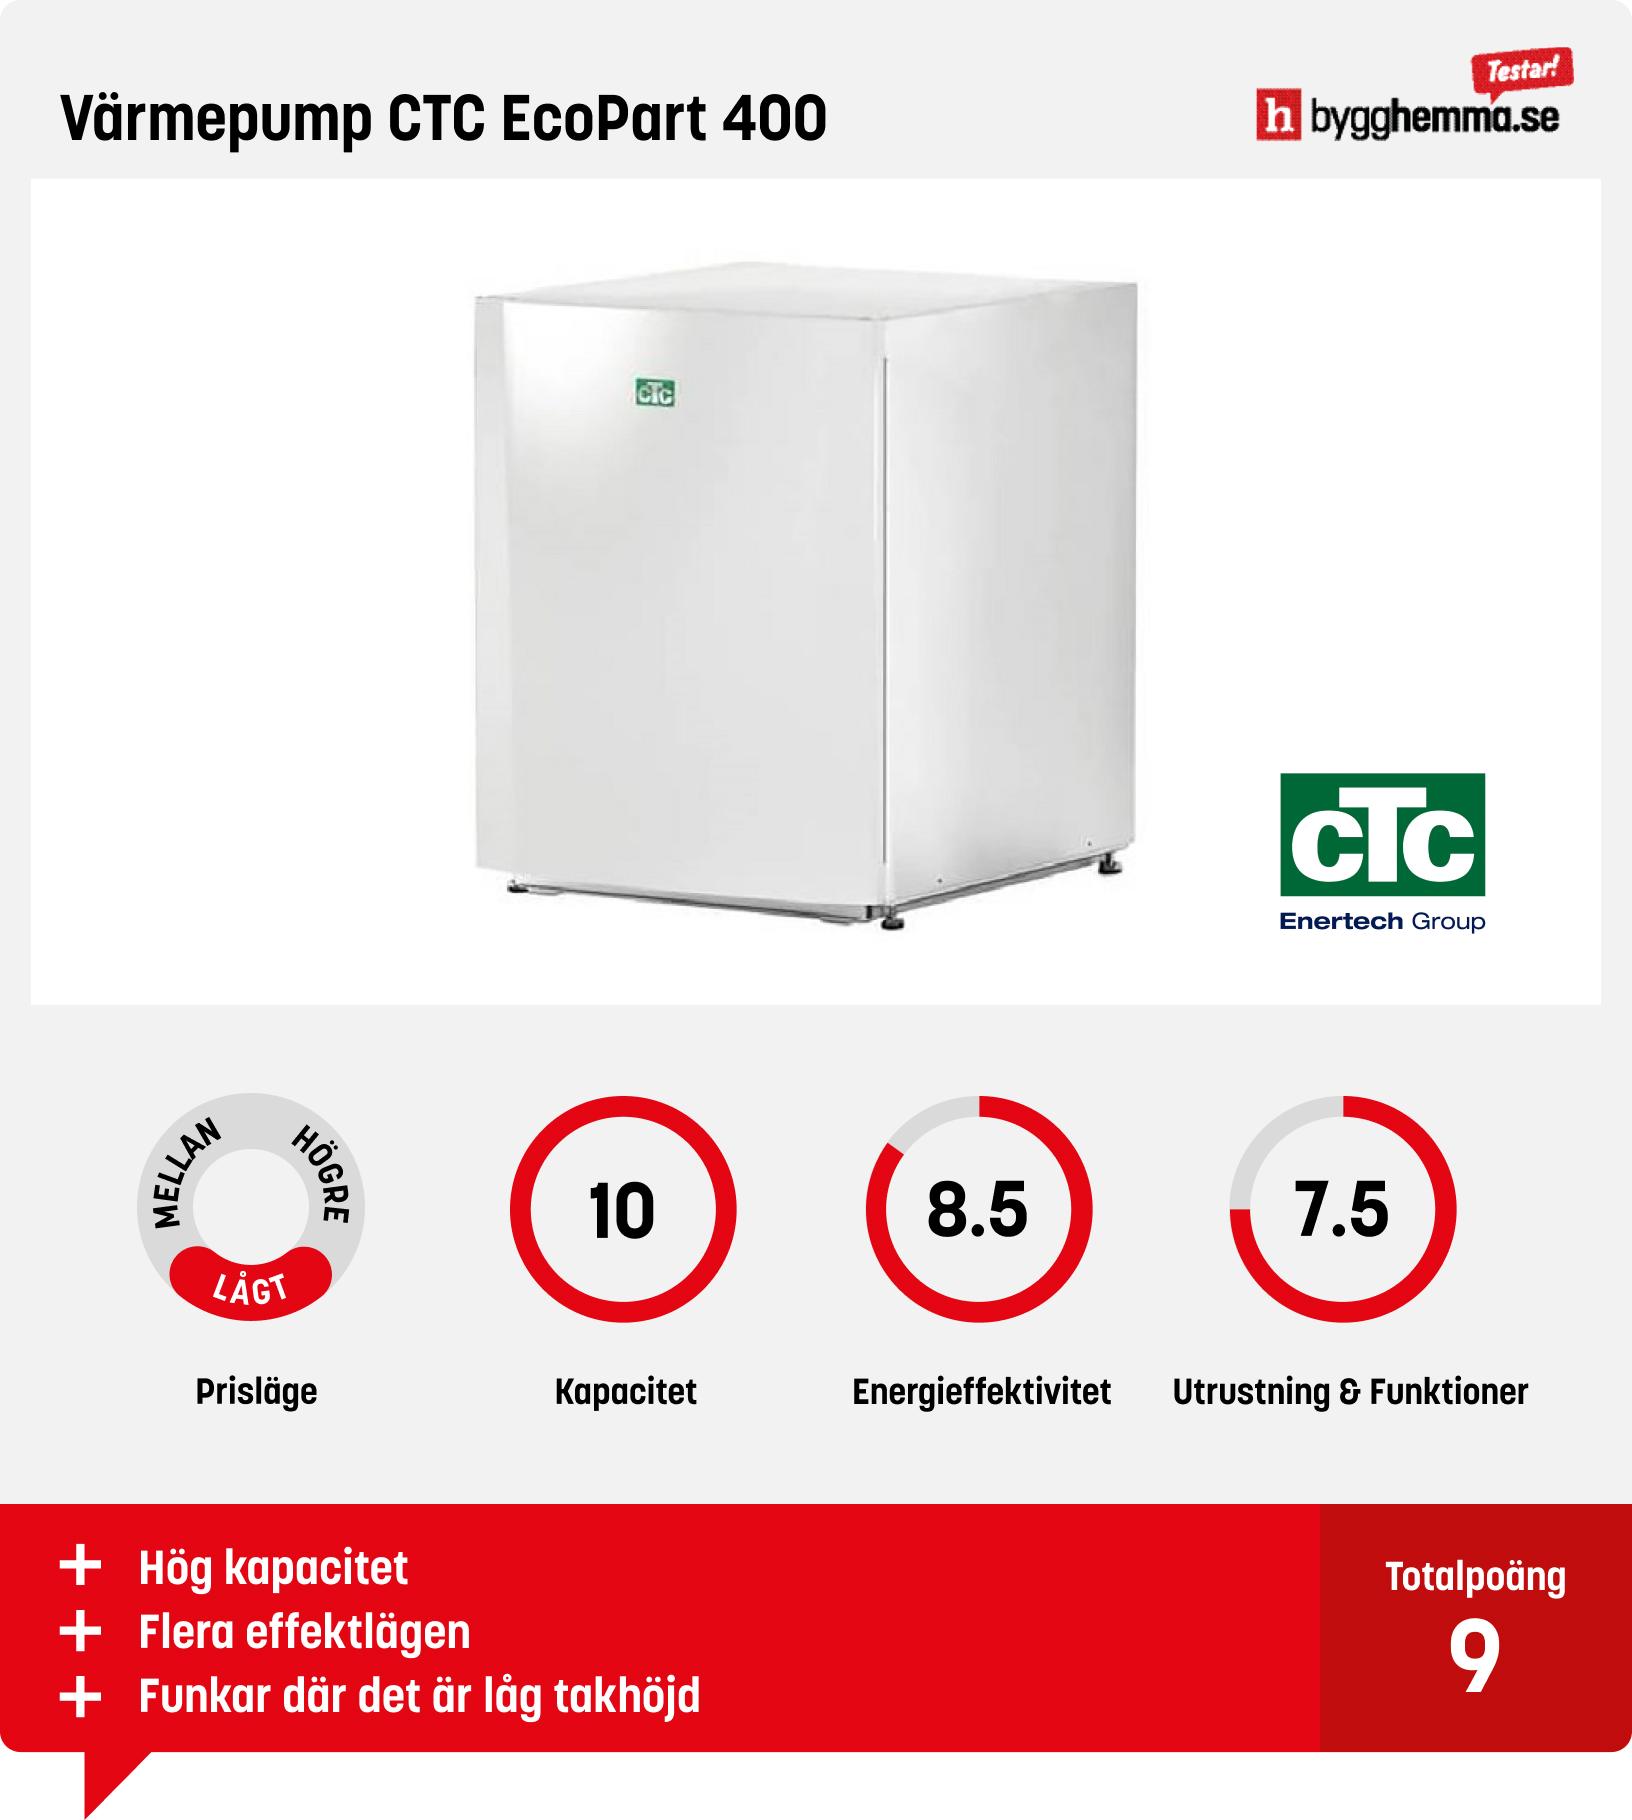 Bergvärmepump bäst i test - Värmepump CTC EcoPart 400